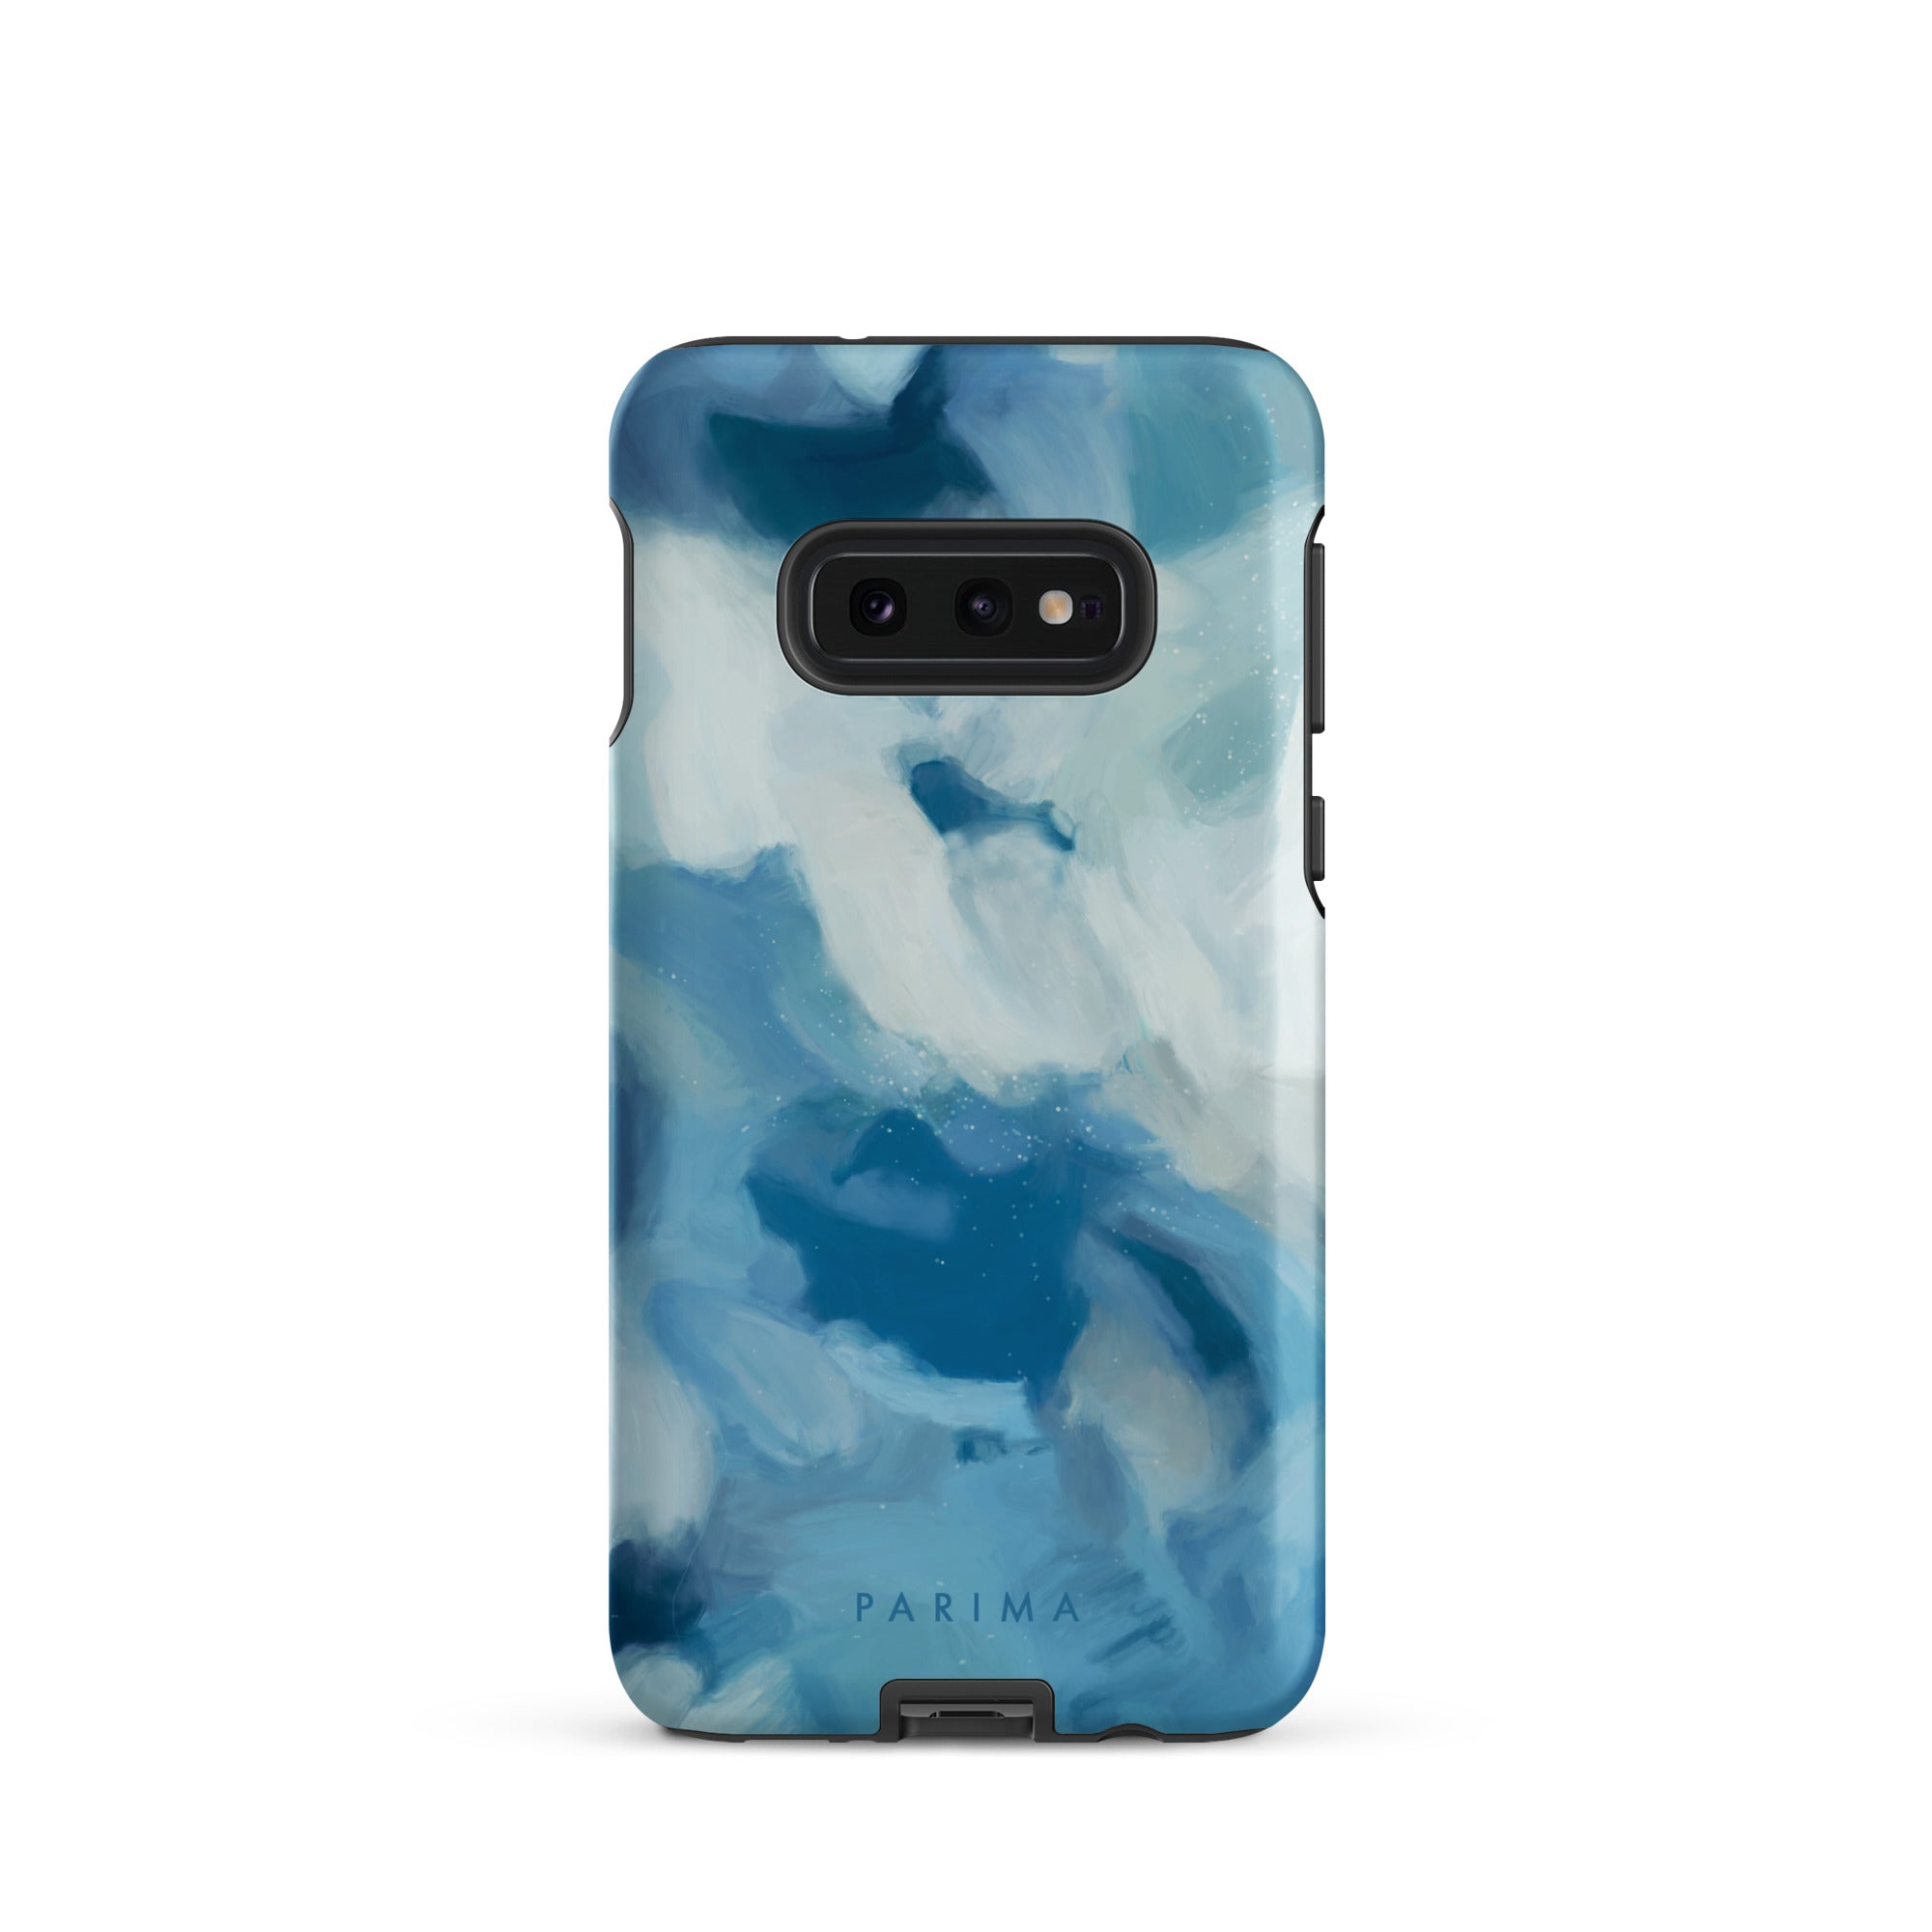 Liviana, blue abstract art on Samsung Galaxy S10e tough case by Parima Studio